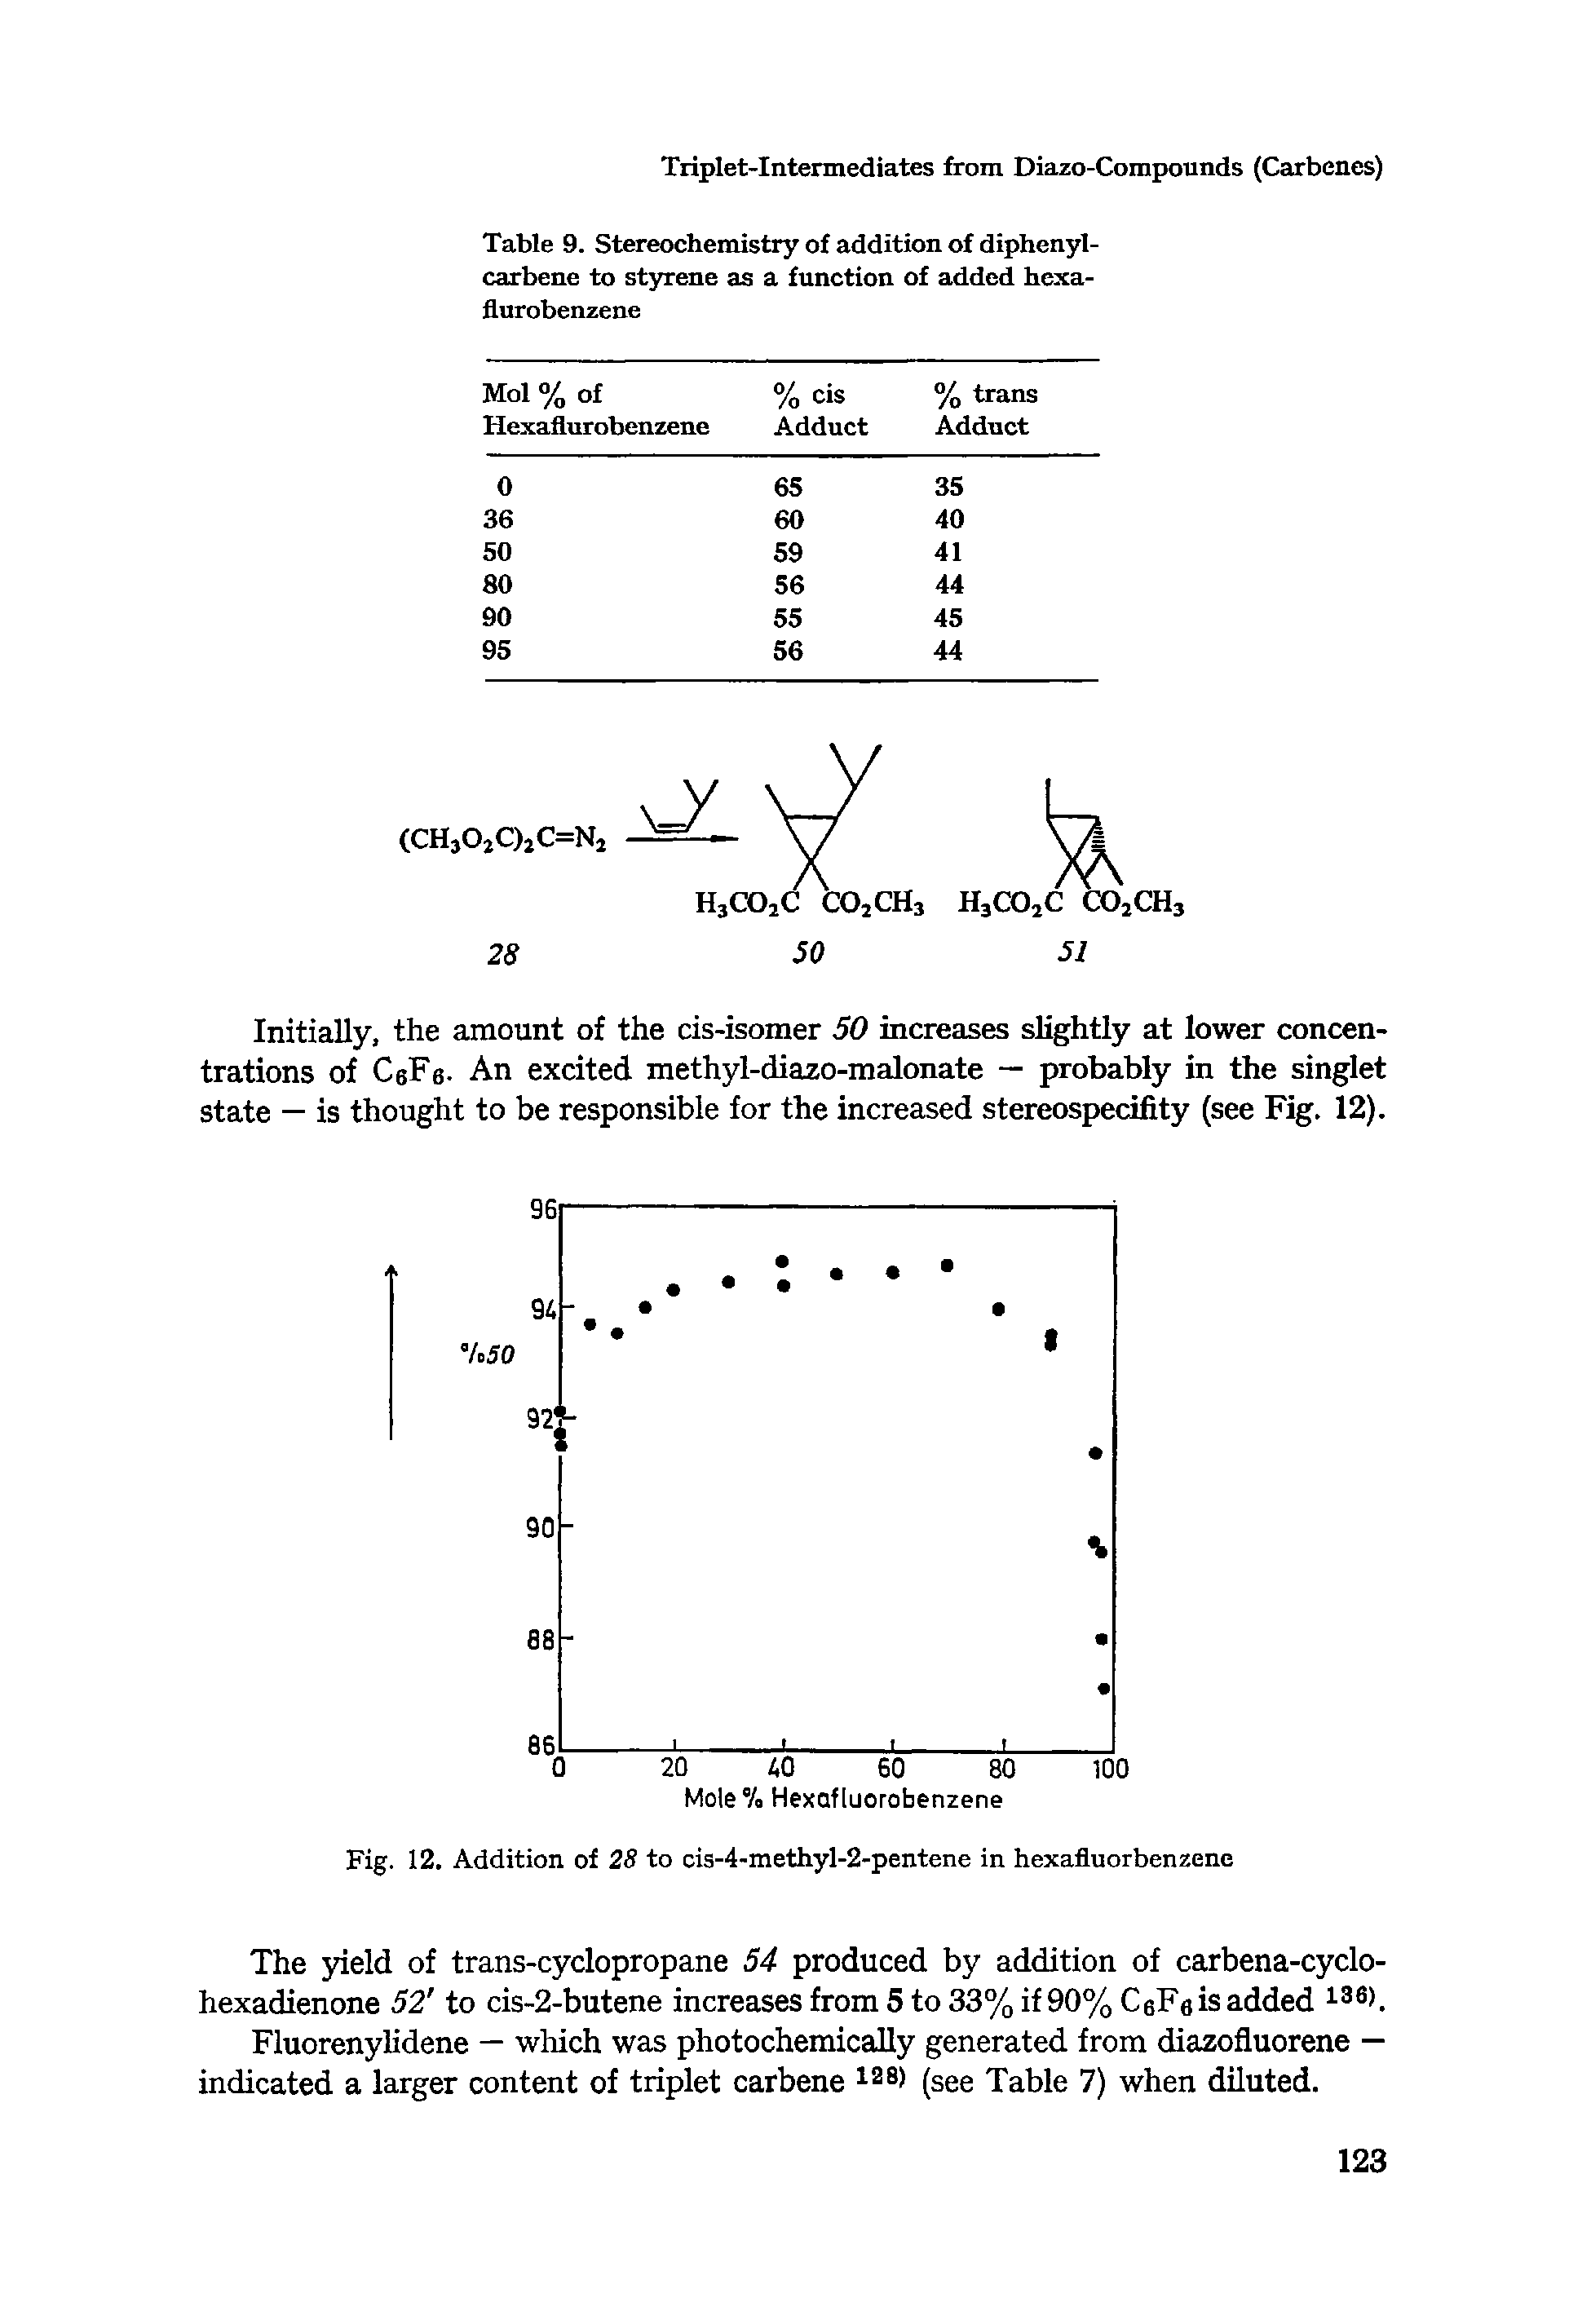 Table 9. Stereochemistry of addition of diphenyl-carbene to styrene as a function of added hexa-flurobenzene...